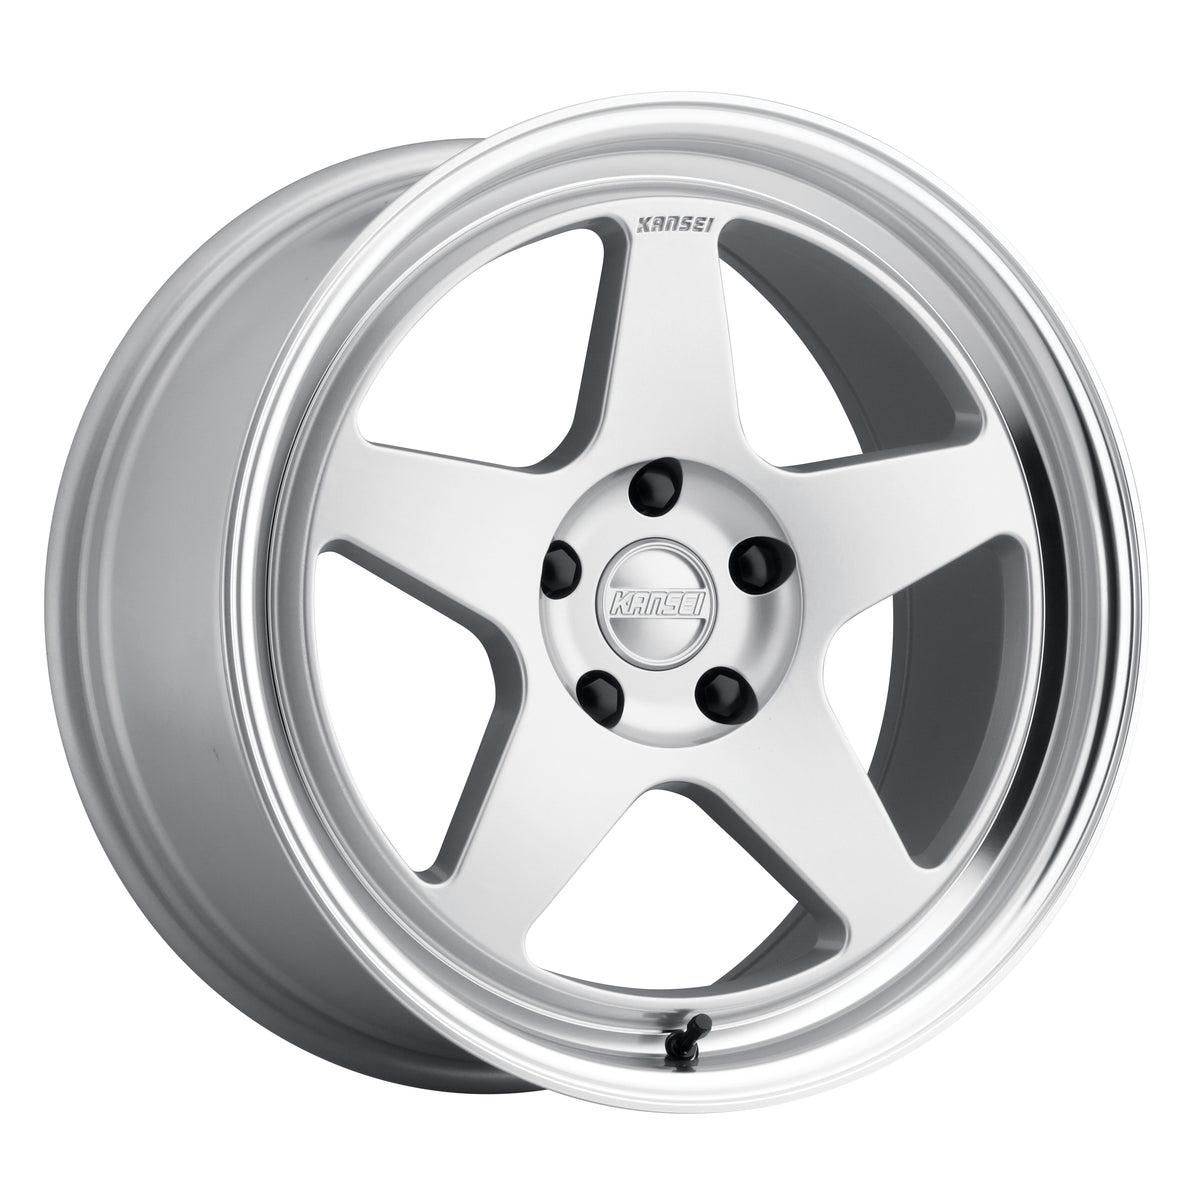 K12H KNP Wheel, Size: 17" x 9", Bolt Pattern: 5 x 120 mm, Backspace: 6.38" [Finish: Hyper Silver]